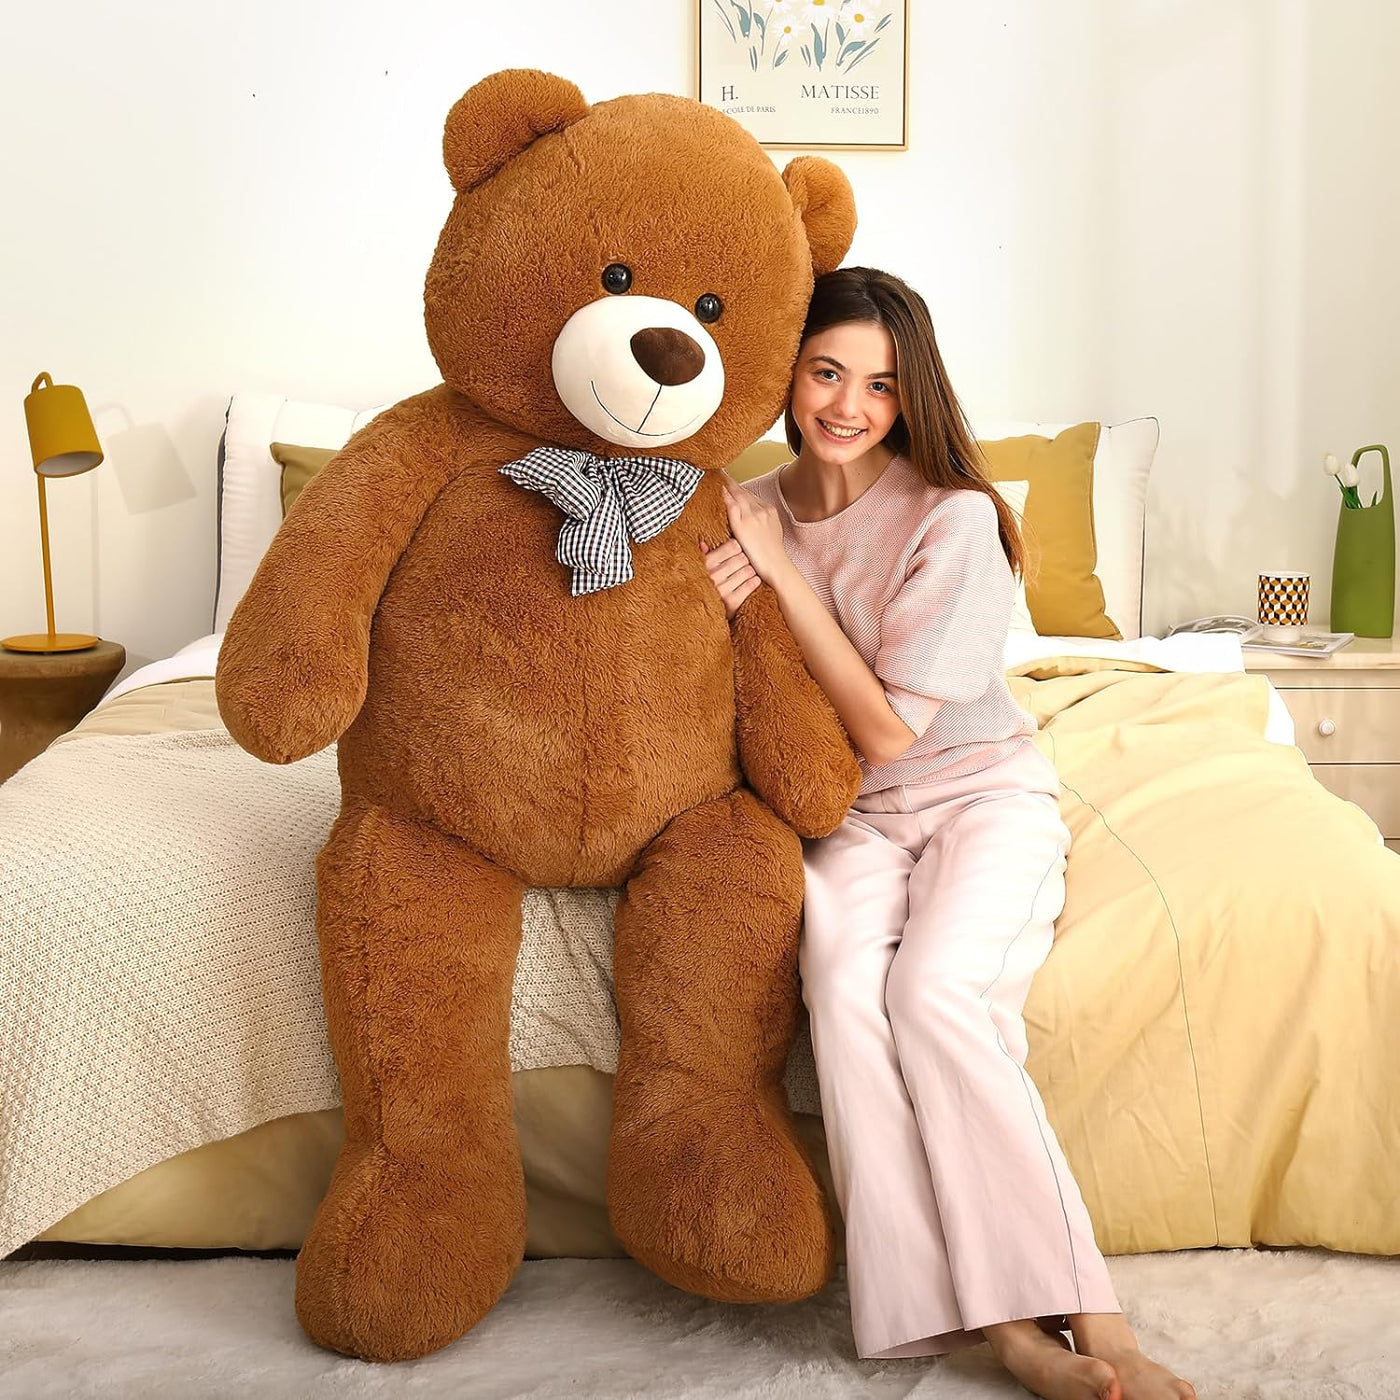 Giant Teddy Bear Stuffed Toy, Dark Brown, 59 Inches - MorisMos Plush Toys